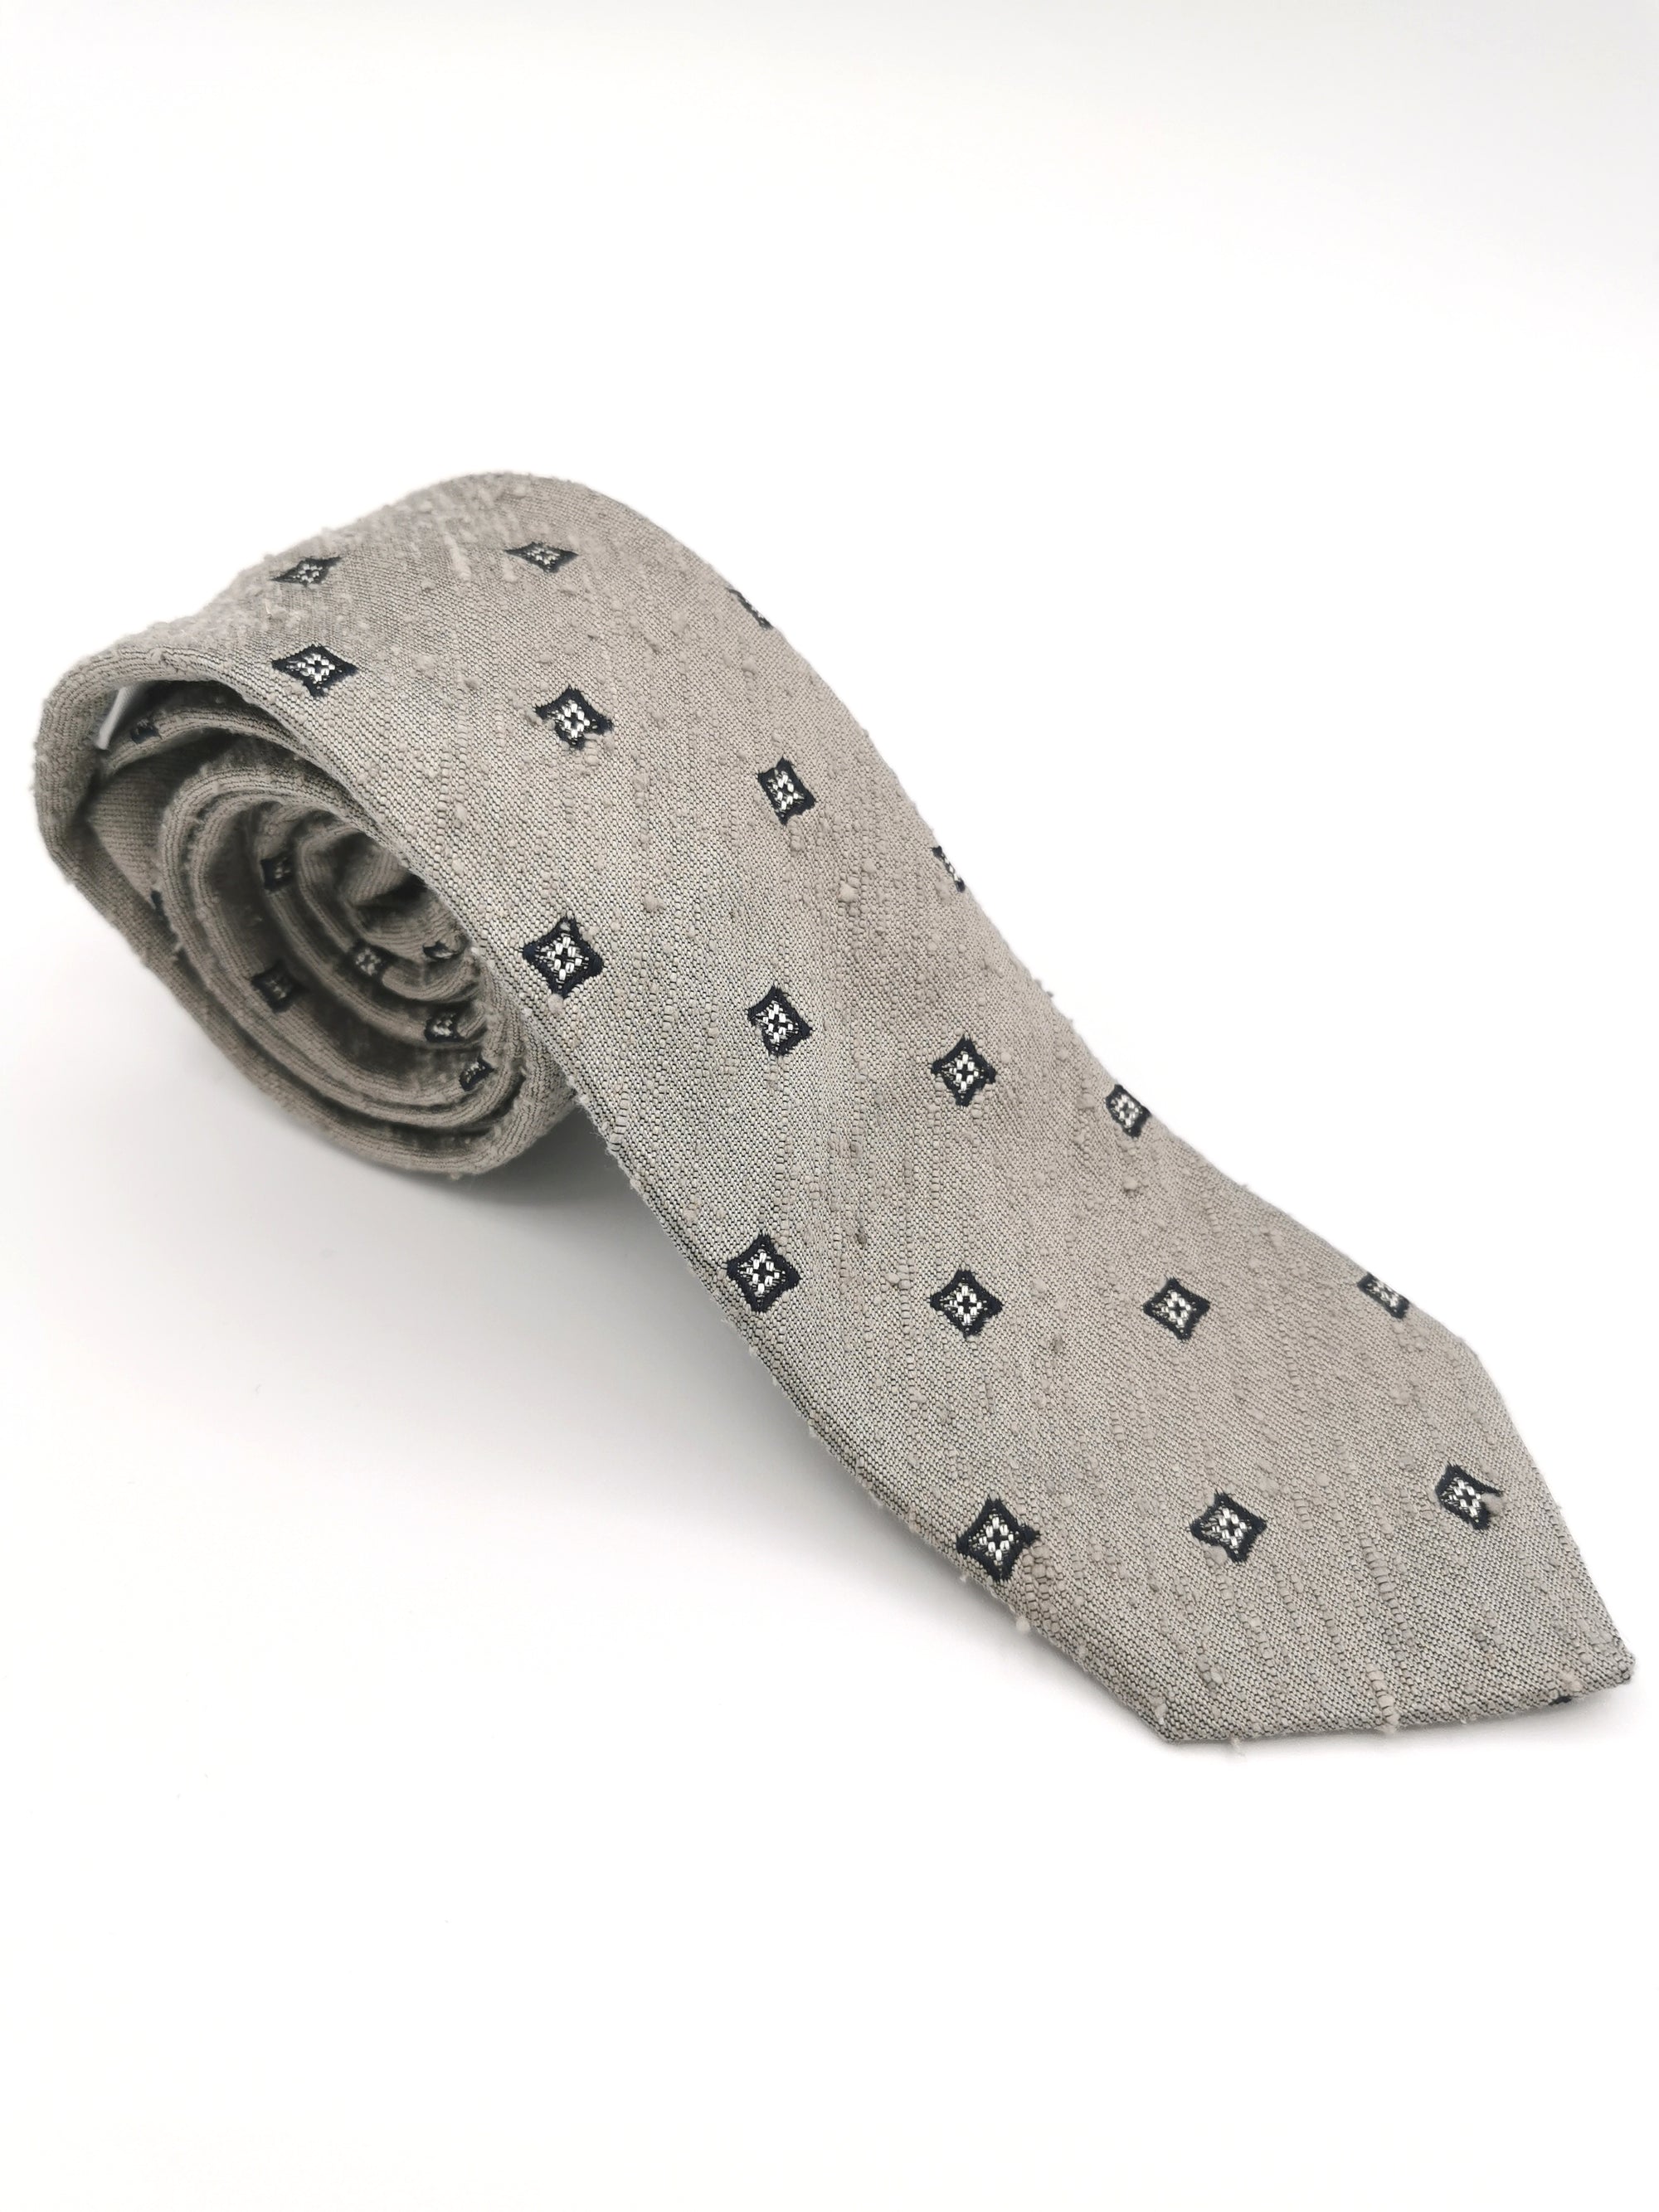 Cravate en soie Shantung à motif petits rectangles